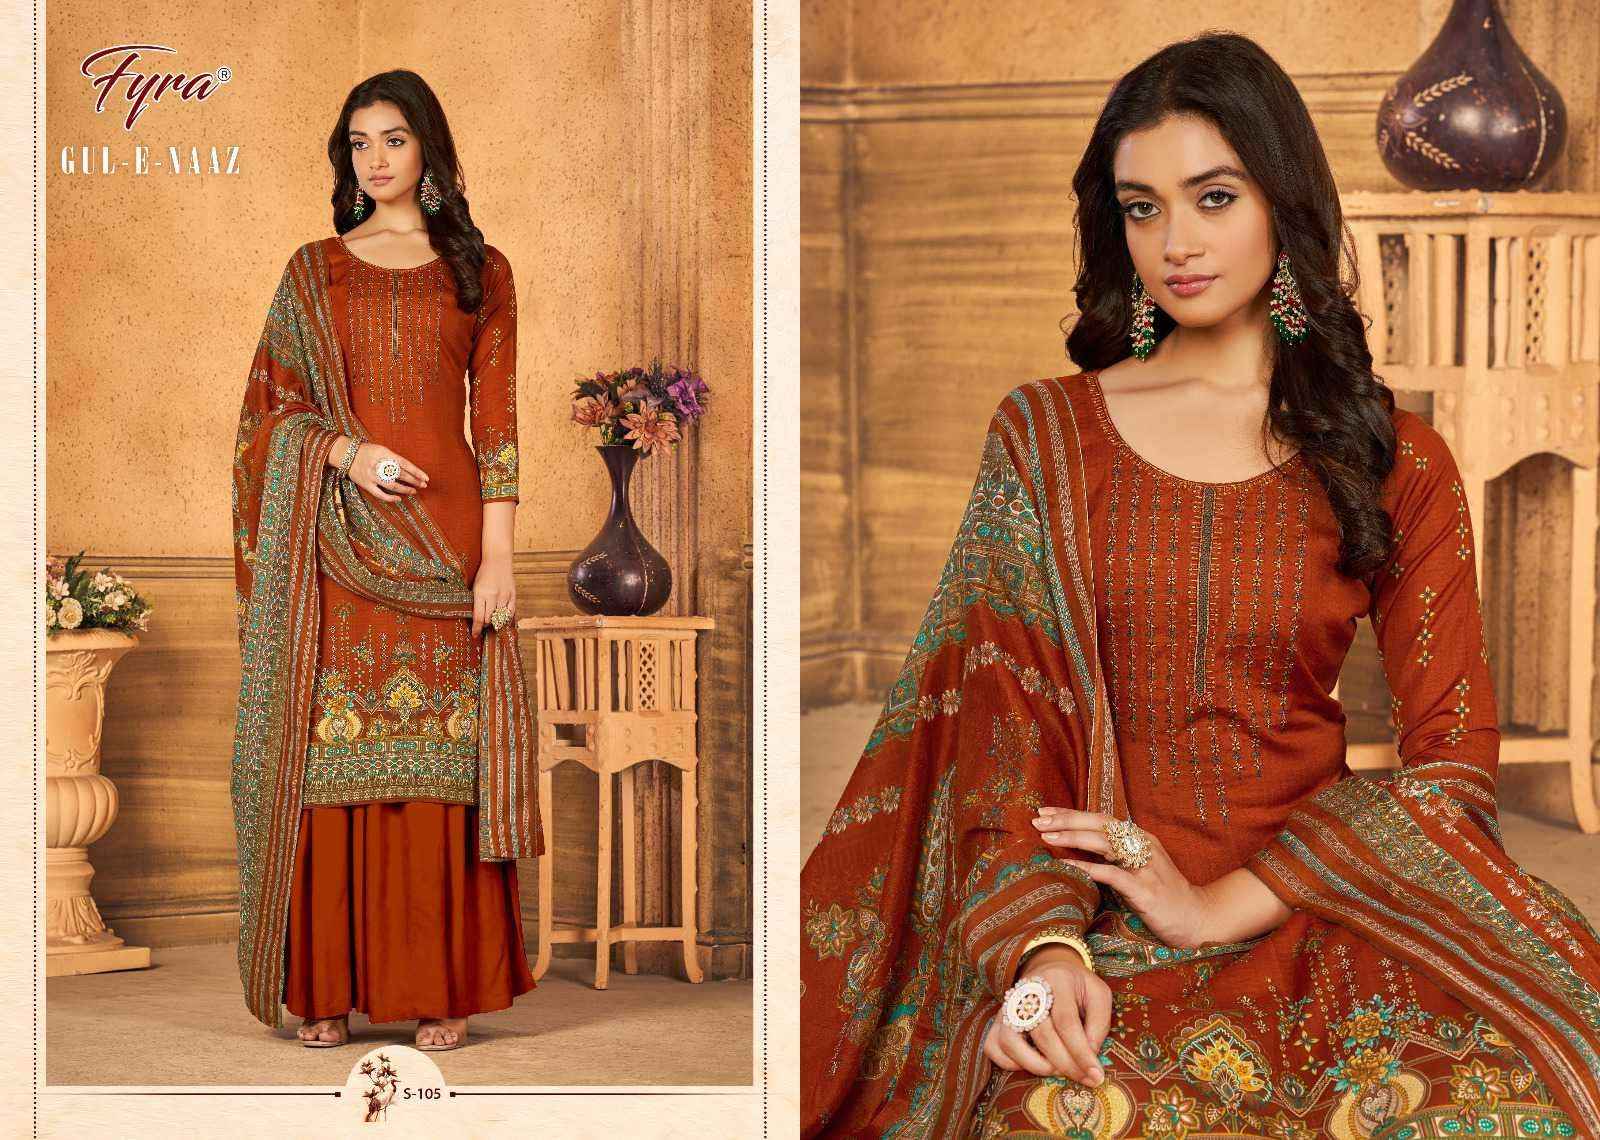 Fyra Designing Hub Gul-E-Naaz Cotton Dress Material 10 pcs Catalogue